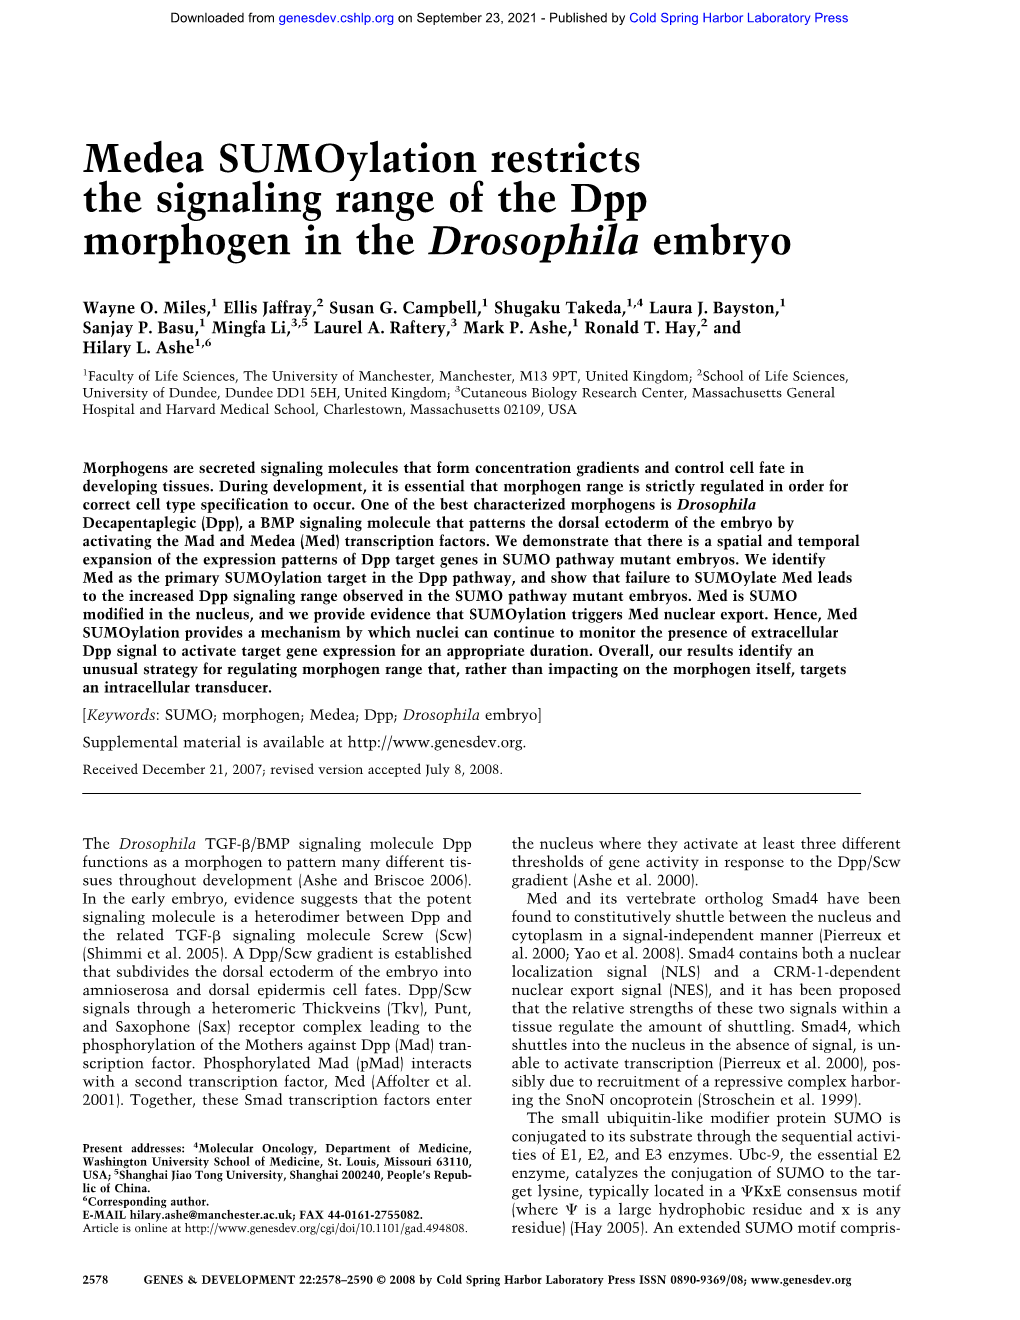 Medea Sumoylation Restricts the Signaling Range of the Dpp Morphogen in the Drosophila Embryo